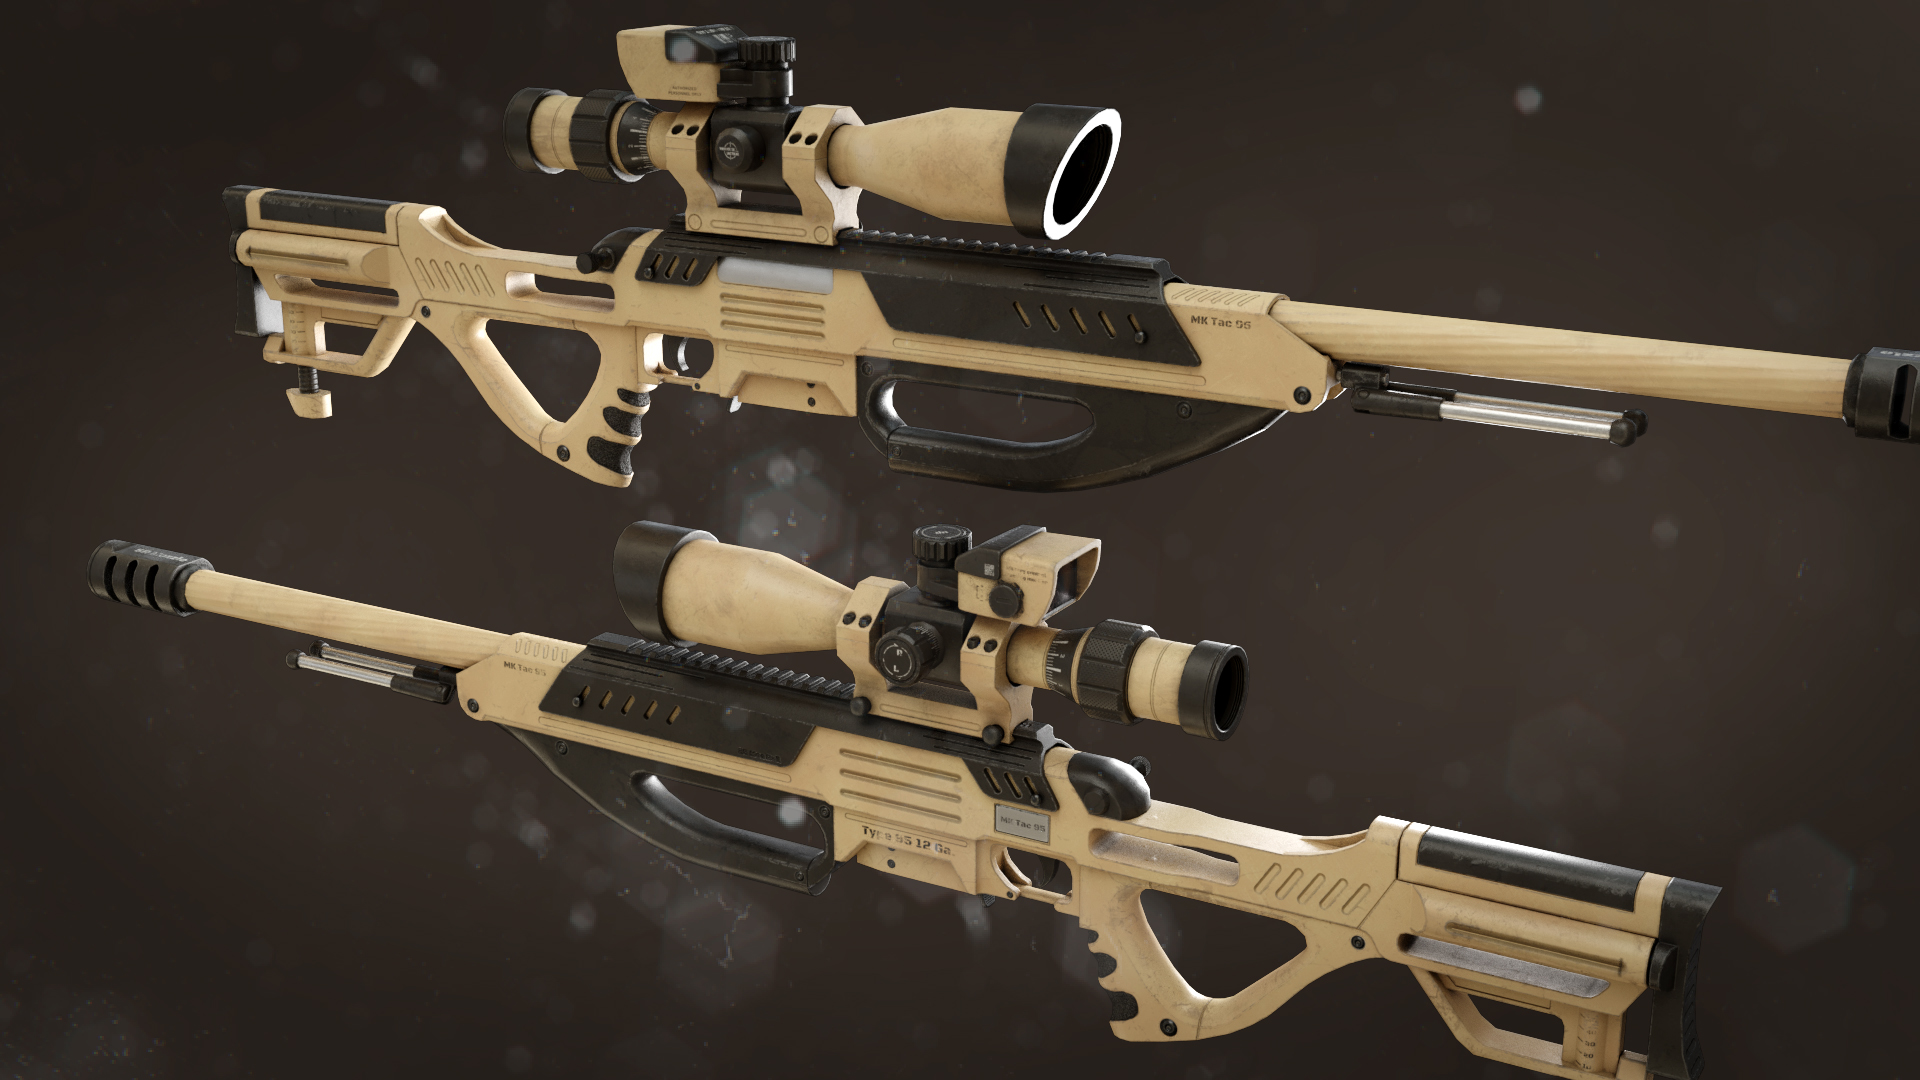 MK Tac 95 Sniper Rifle.